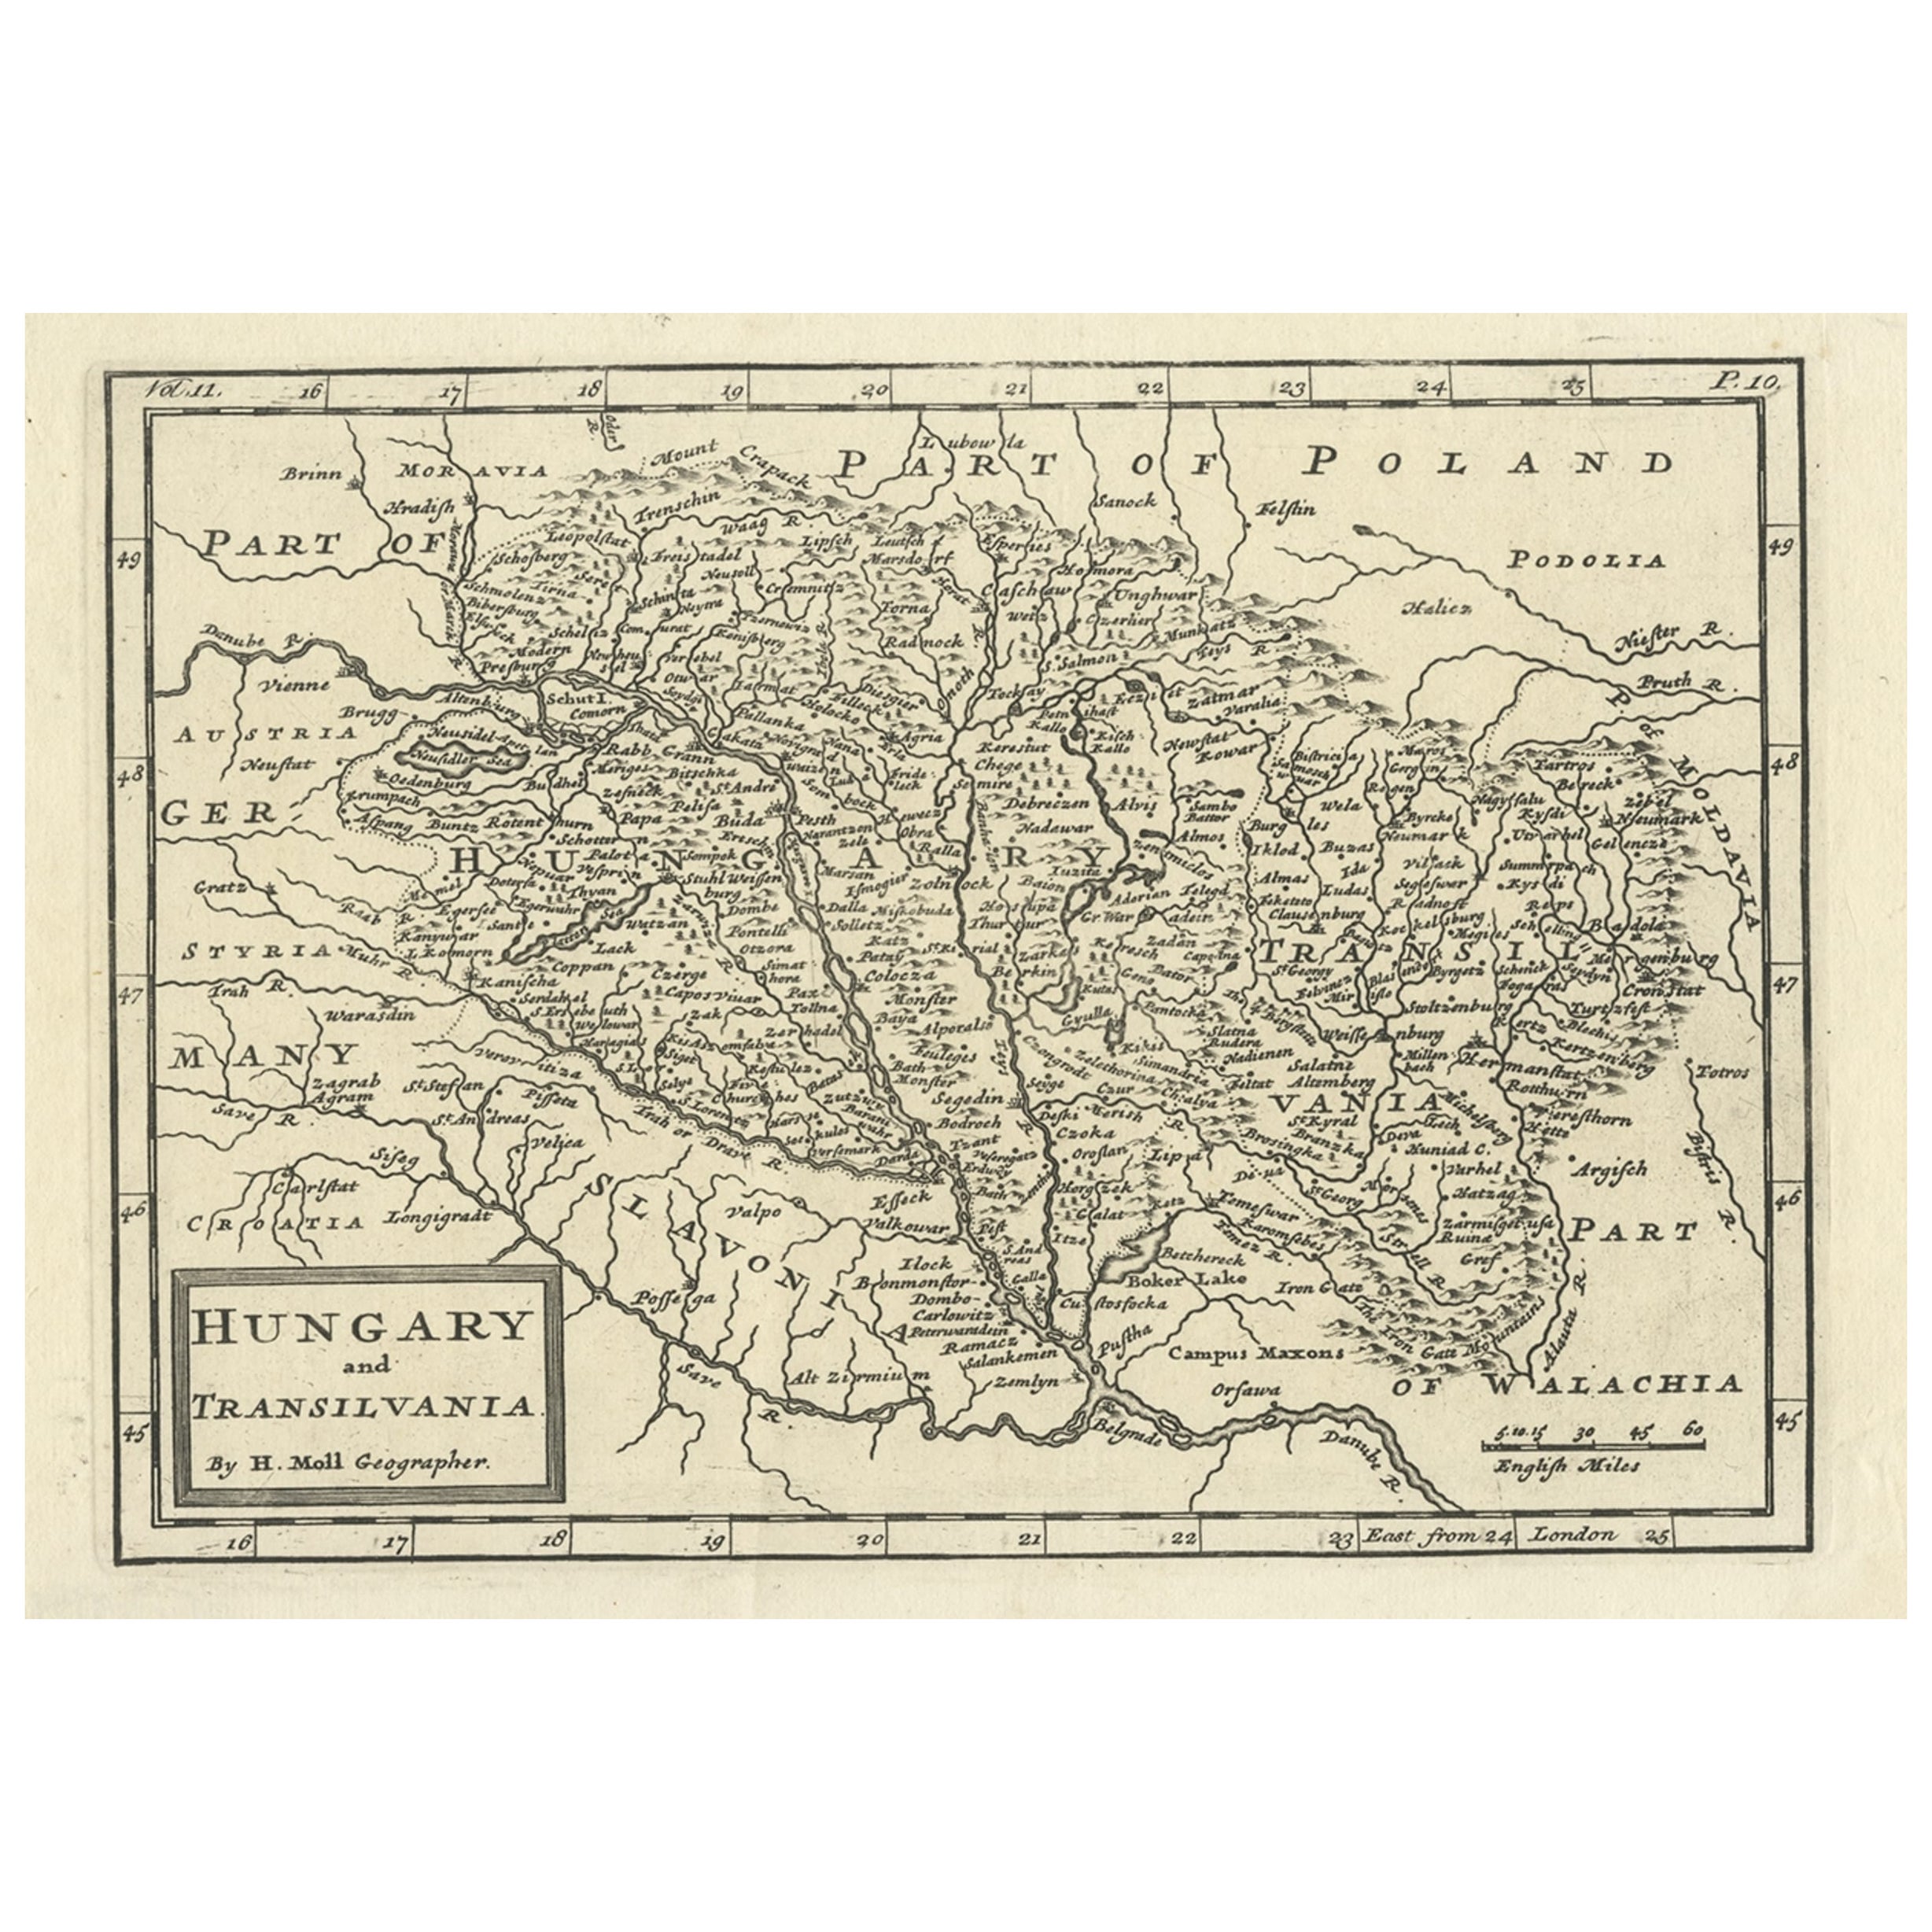 Original Antique Map of Hungary and Transylvania 'Modern Day Romania', C.1710